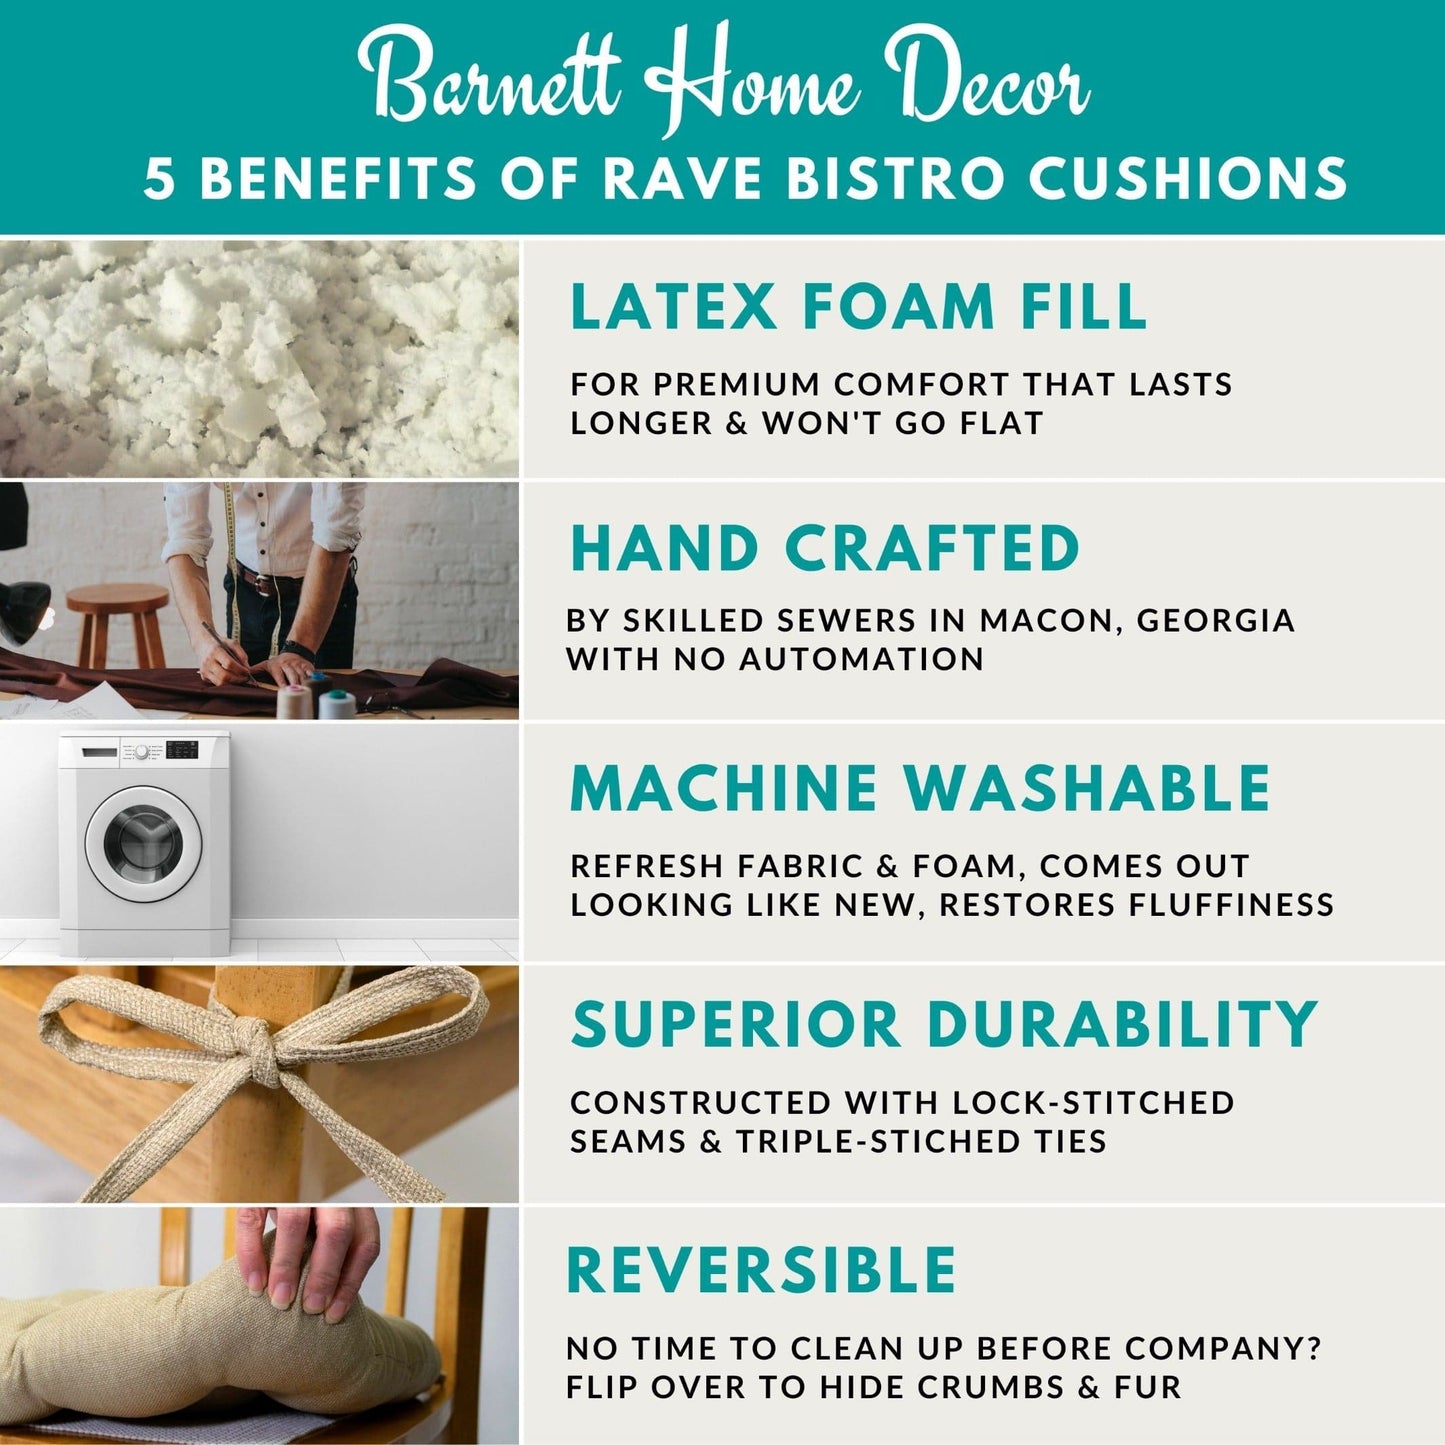 Barnett Home Decor Benefits of Rave Cushions: Machine Washable, Reversible, Latex Foam Fill